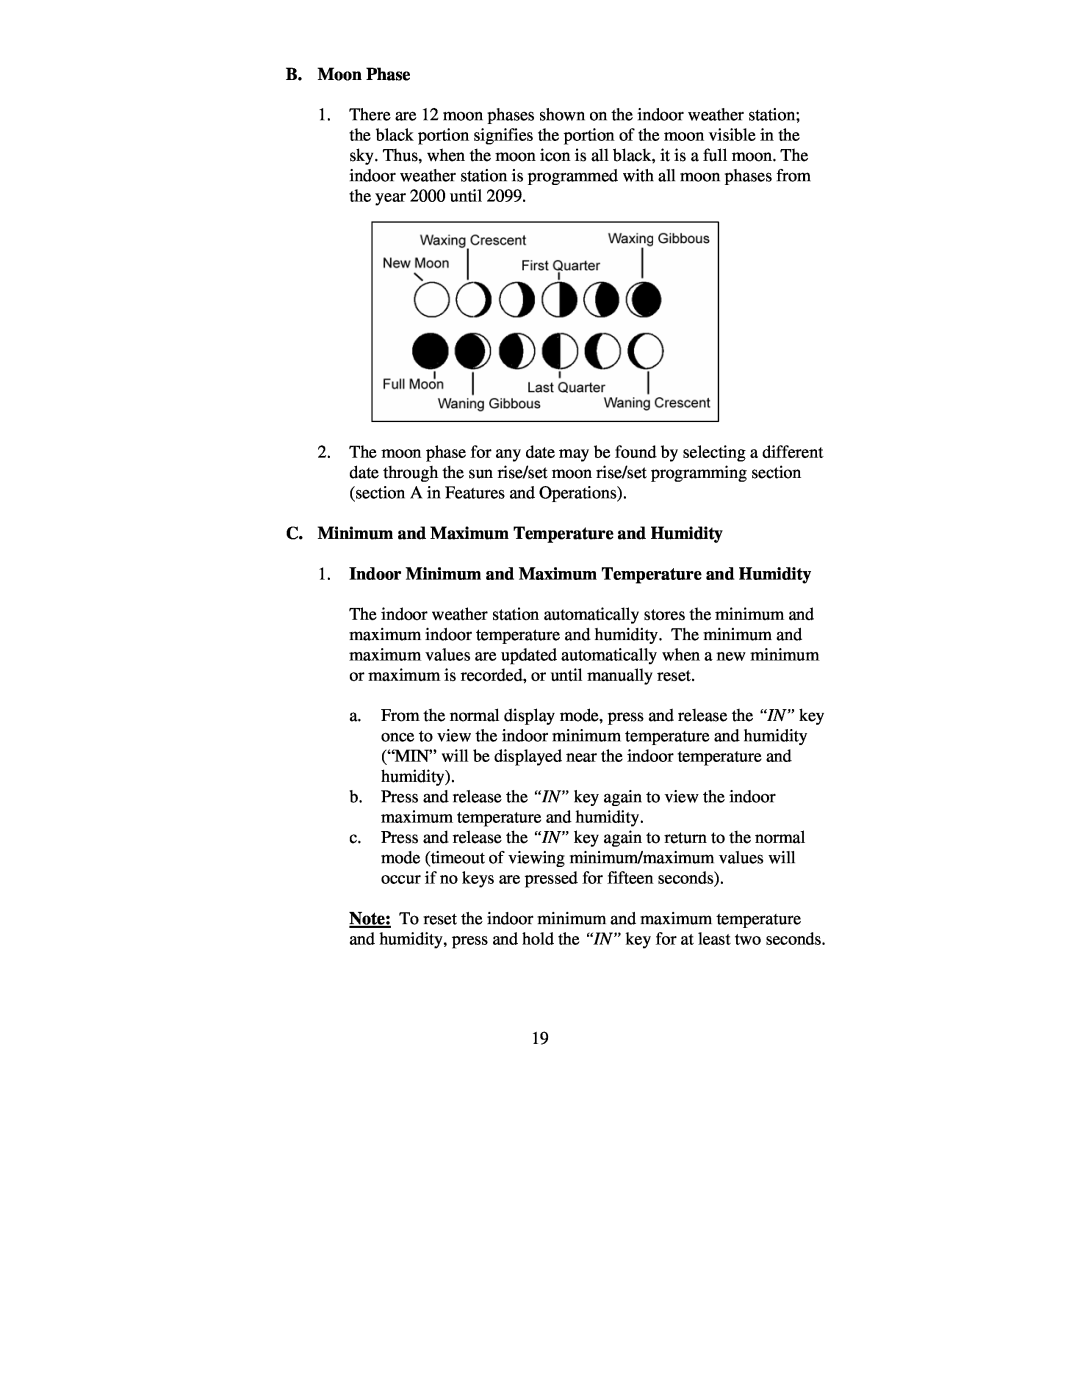 La Crosse Technology WS-8015U instruction manual B.Moon Phase, C.Minimum and Maximum Temperature and Humidity 